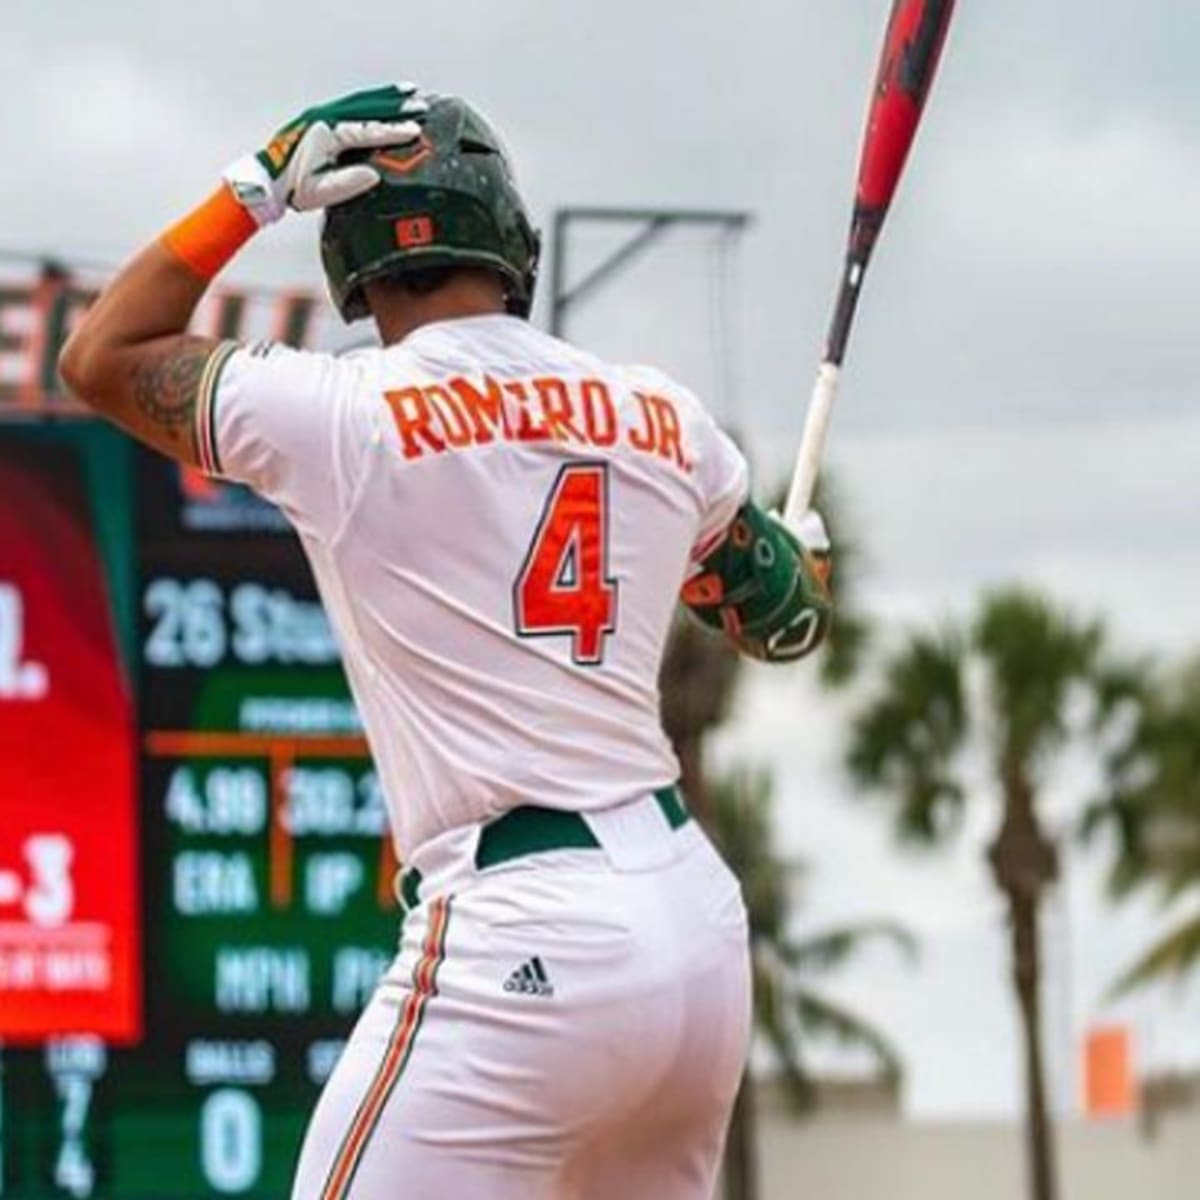 Major League Baseball Draft: 3 Miami Hurricanes Selected - All